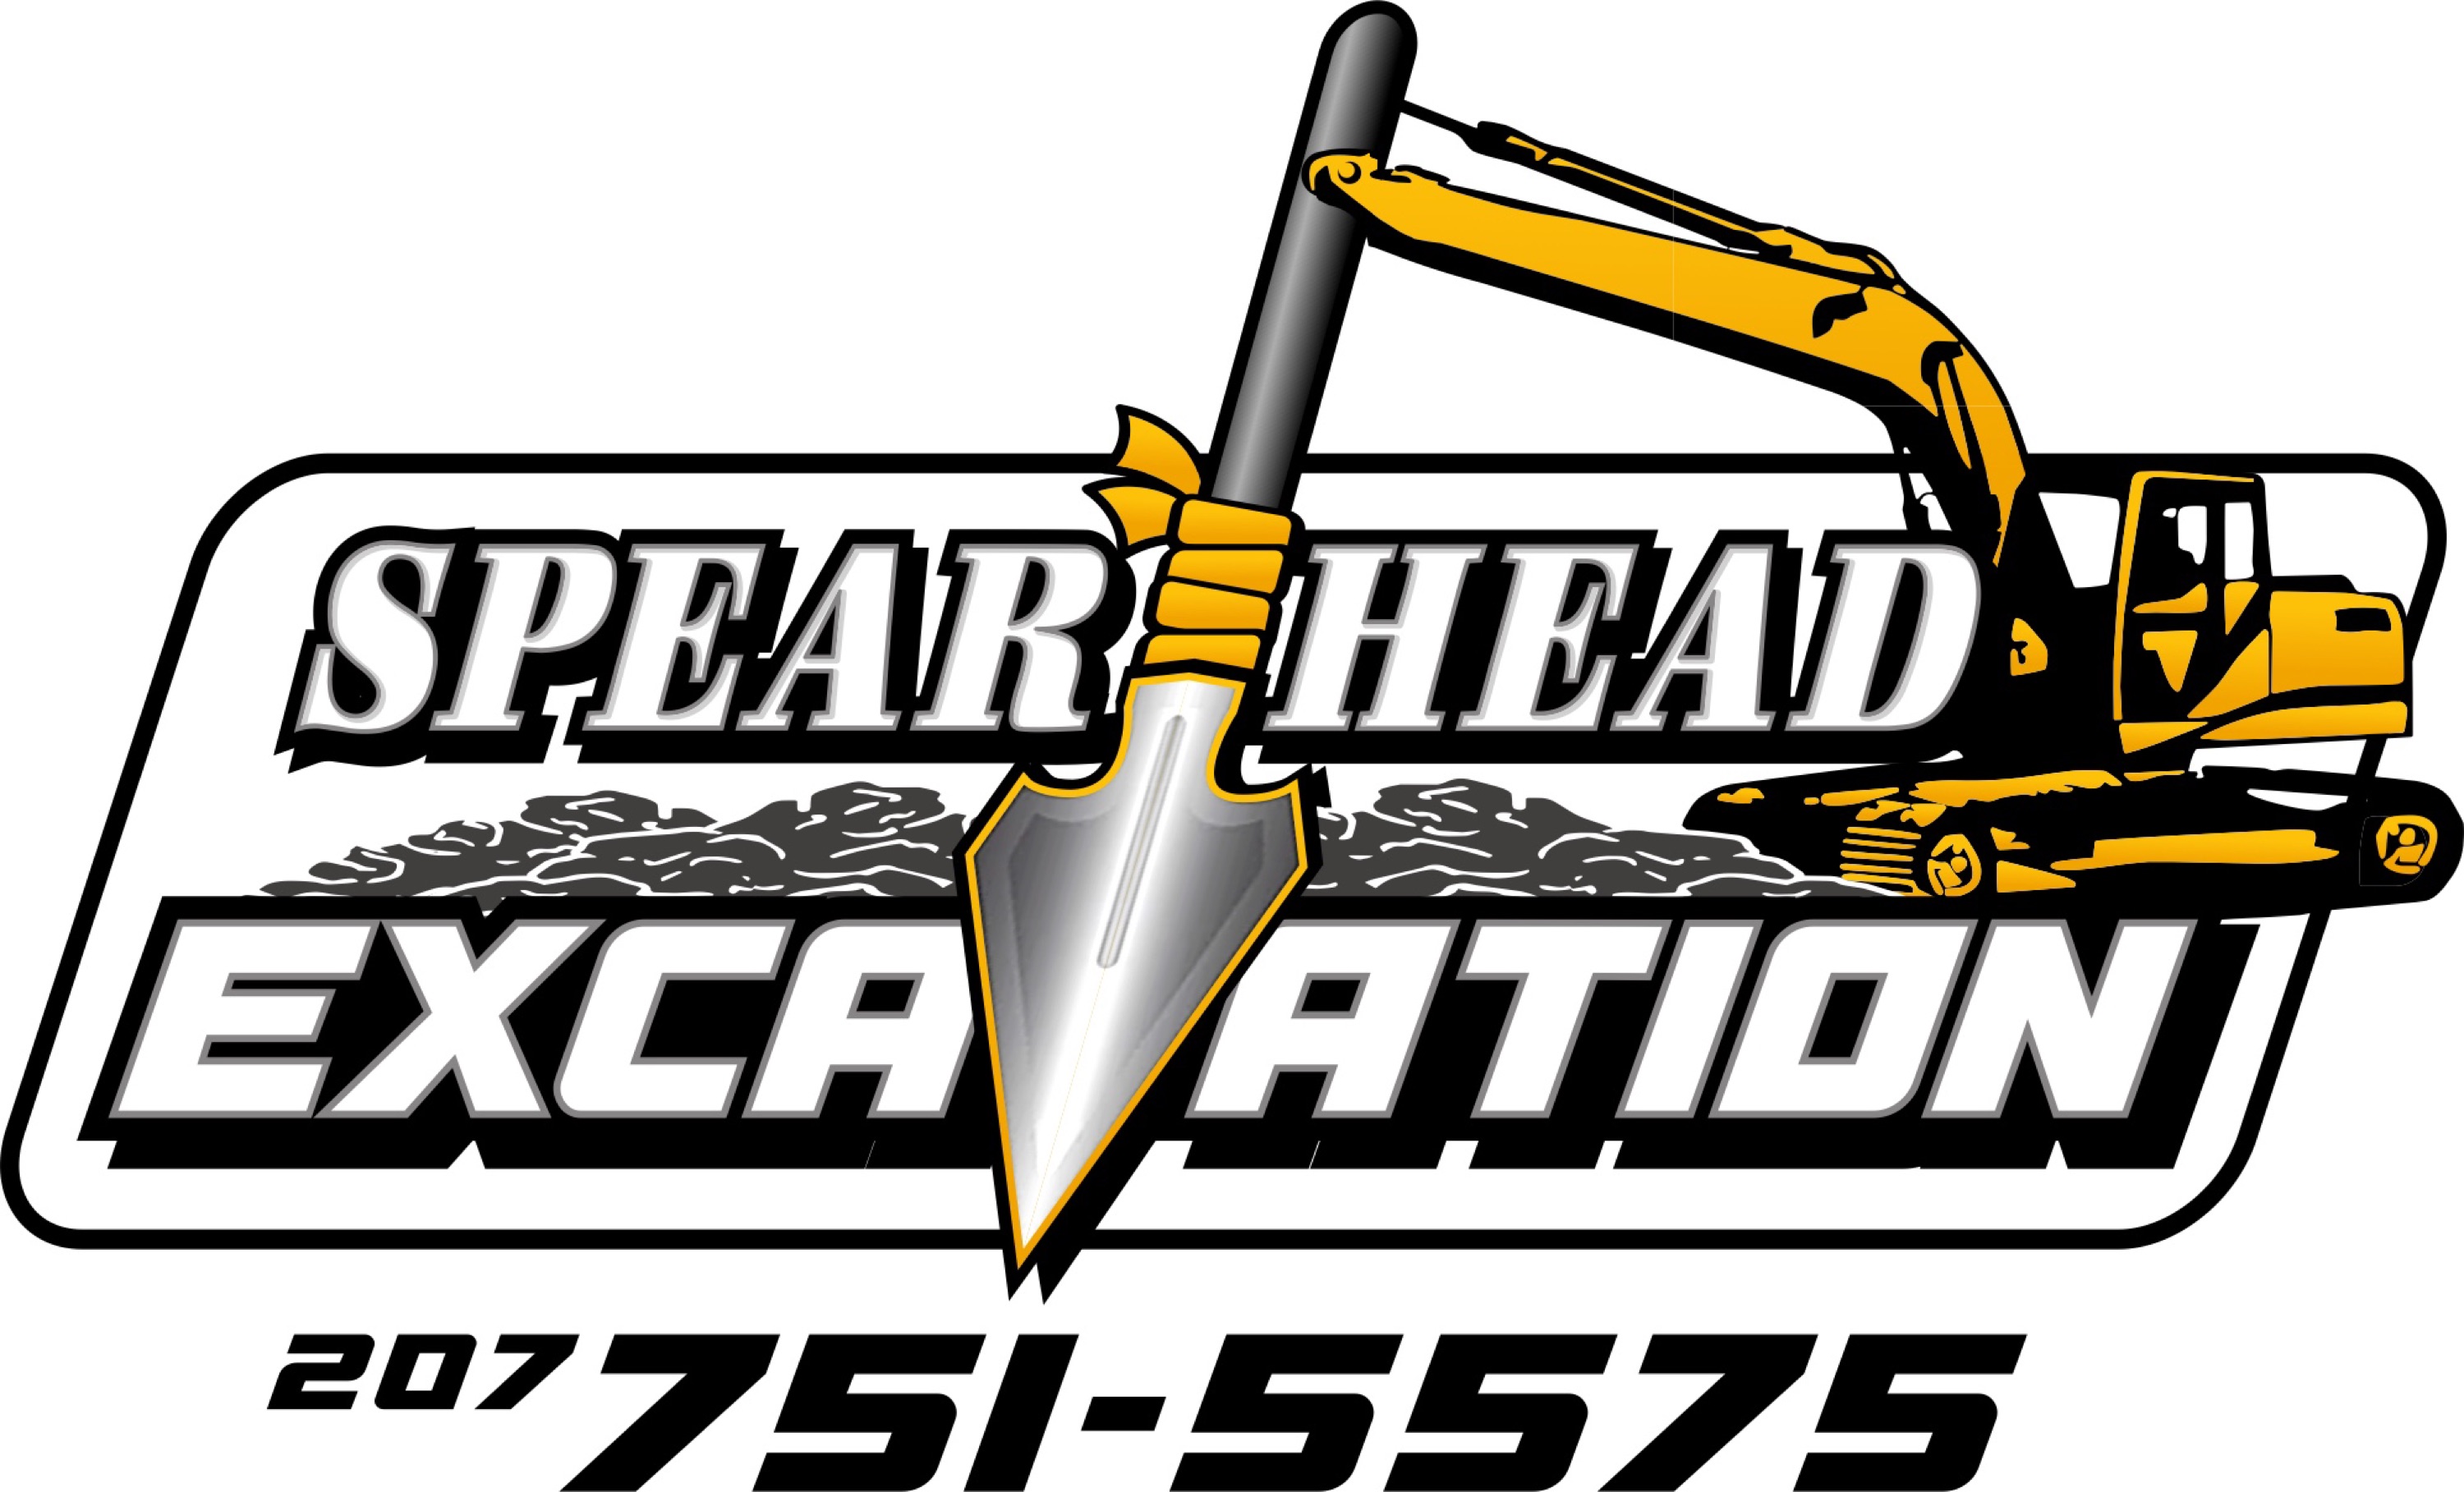 Spear Head Excavation Logo